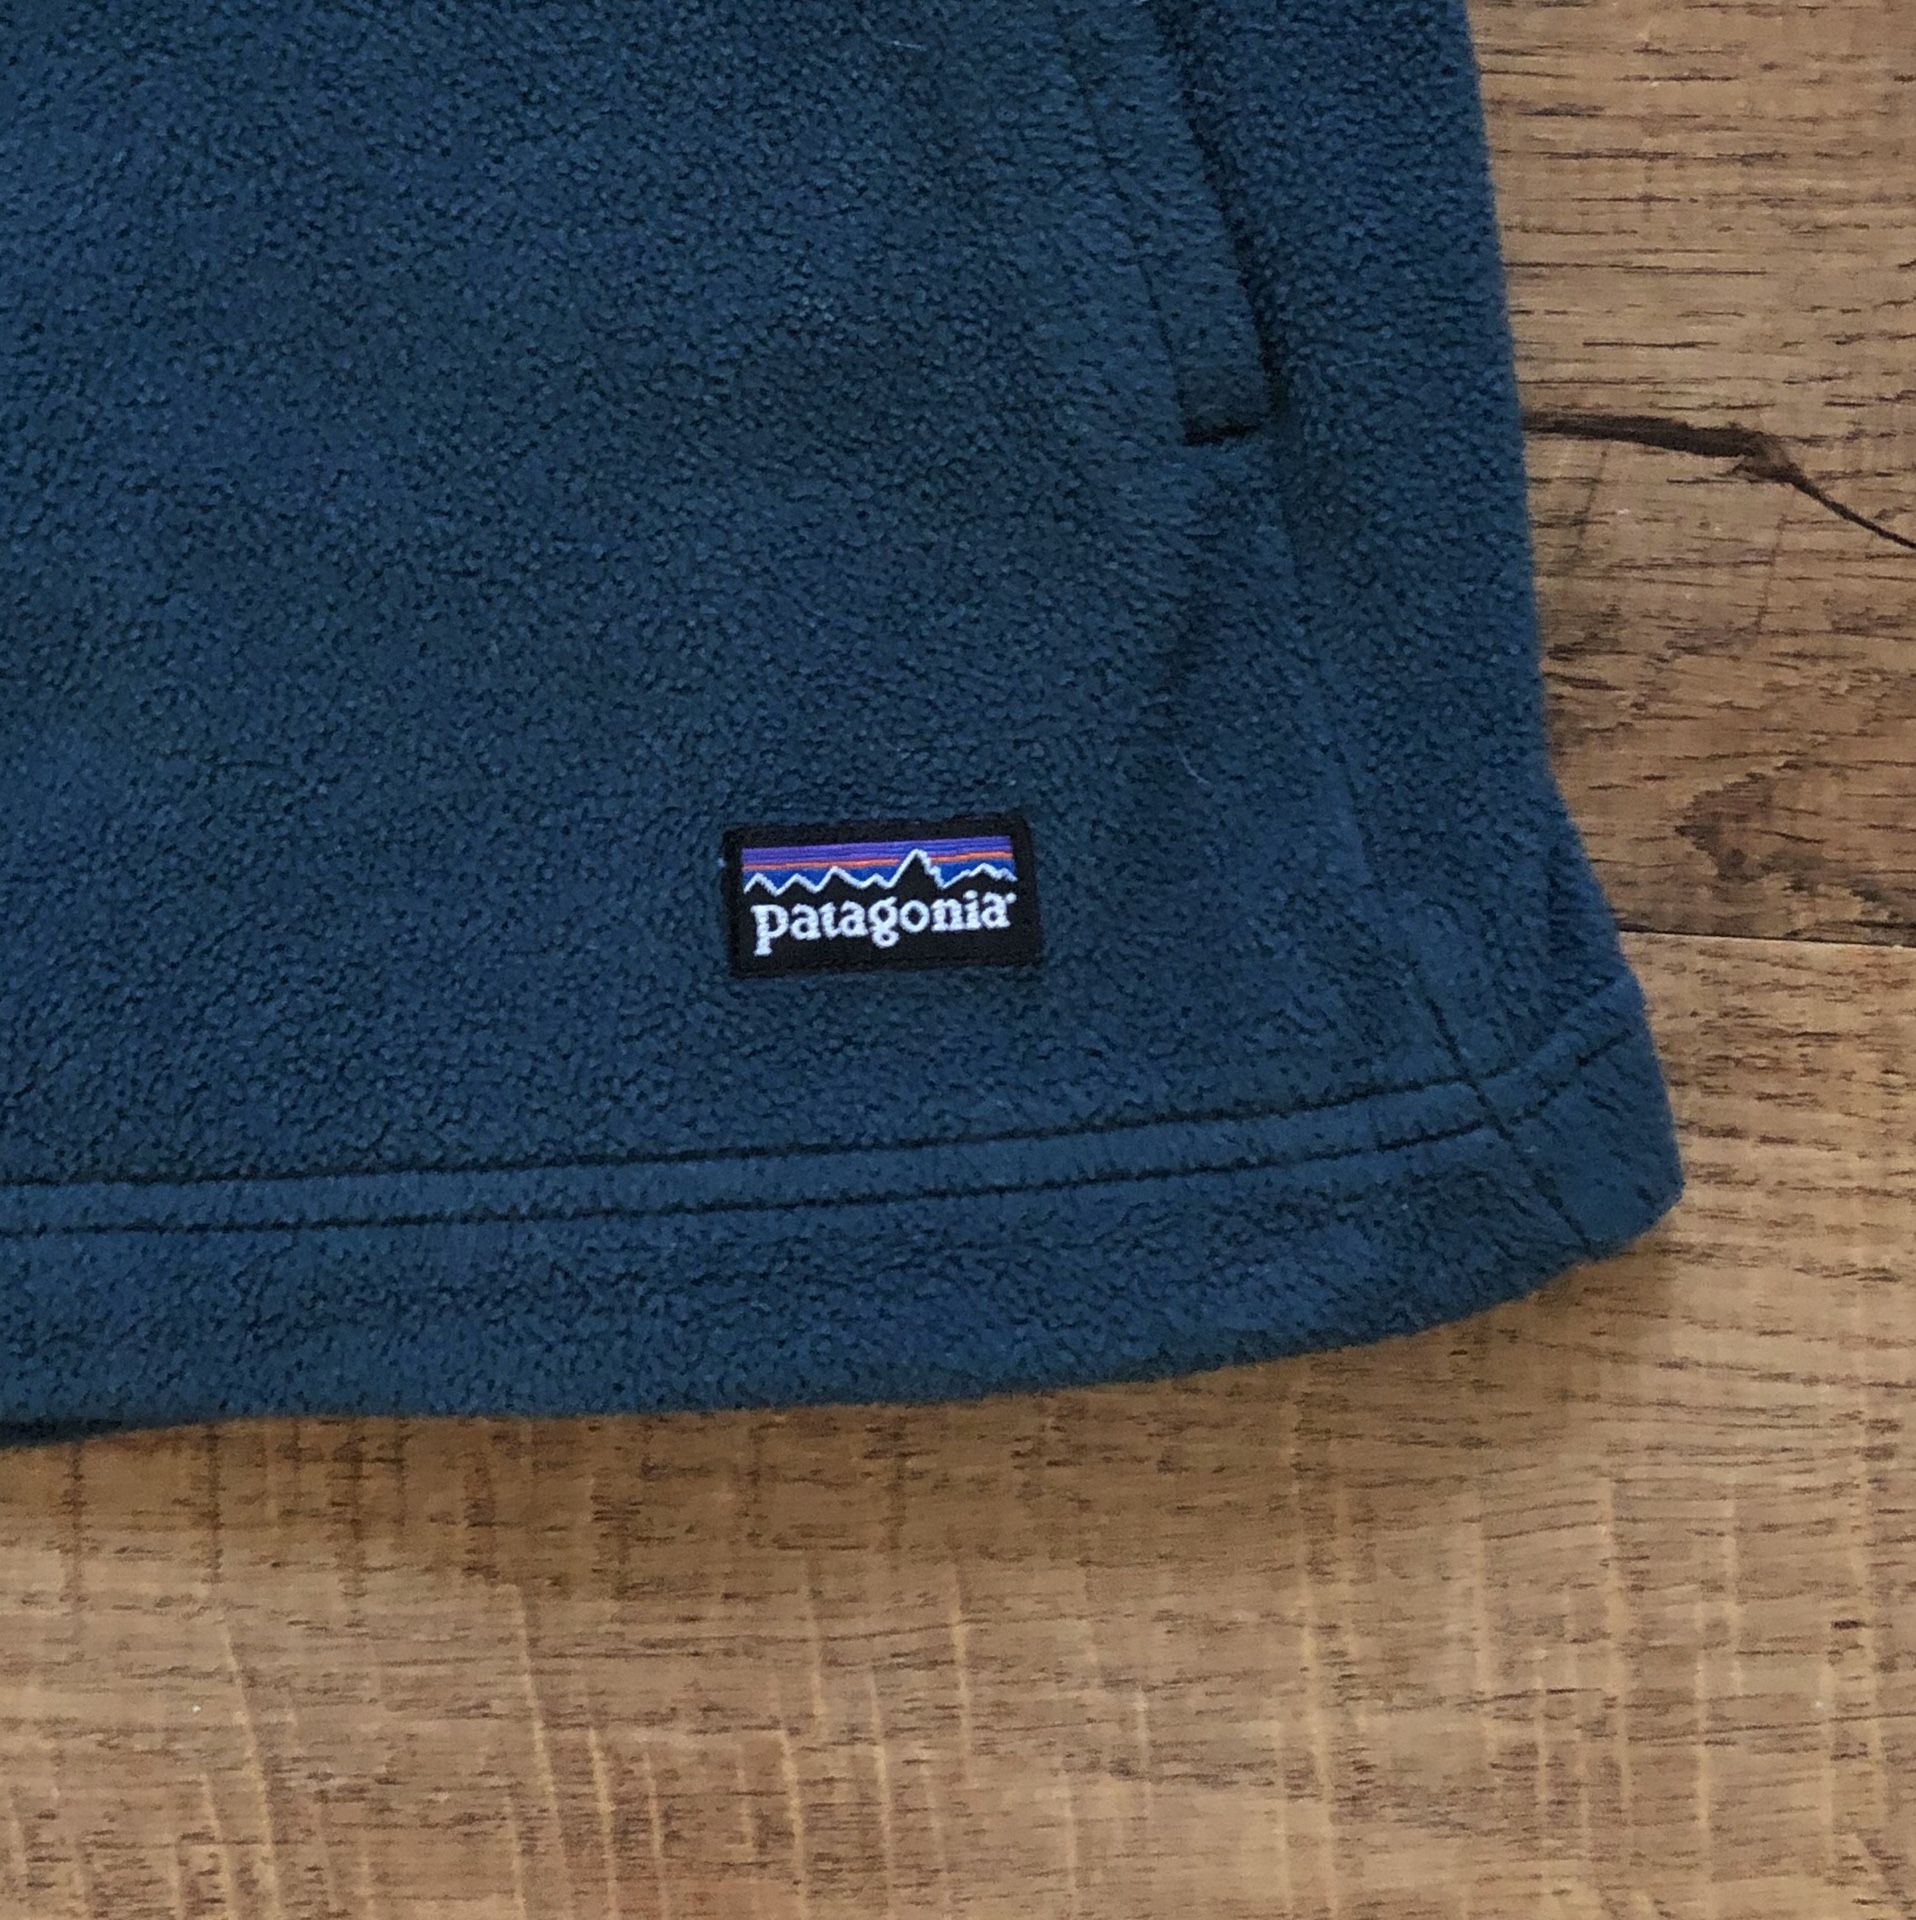 PATAGONIA Women’s Full Zip Fleece Jacket, Medium